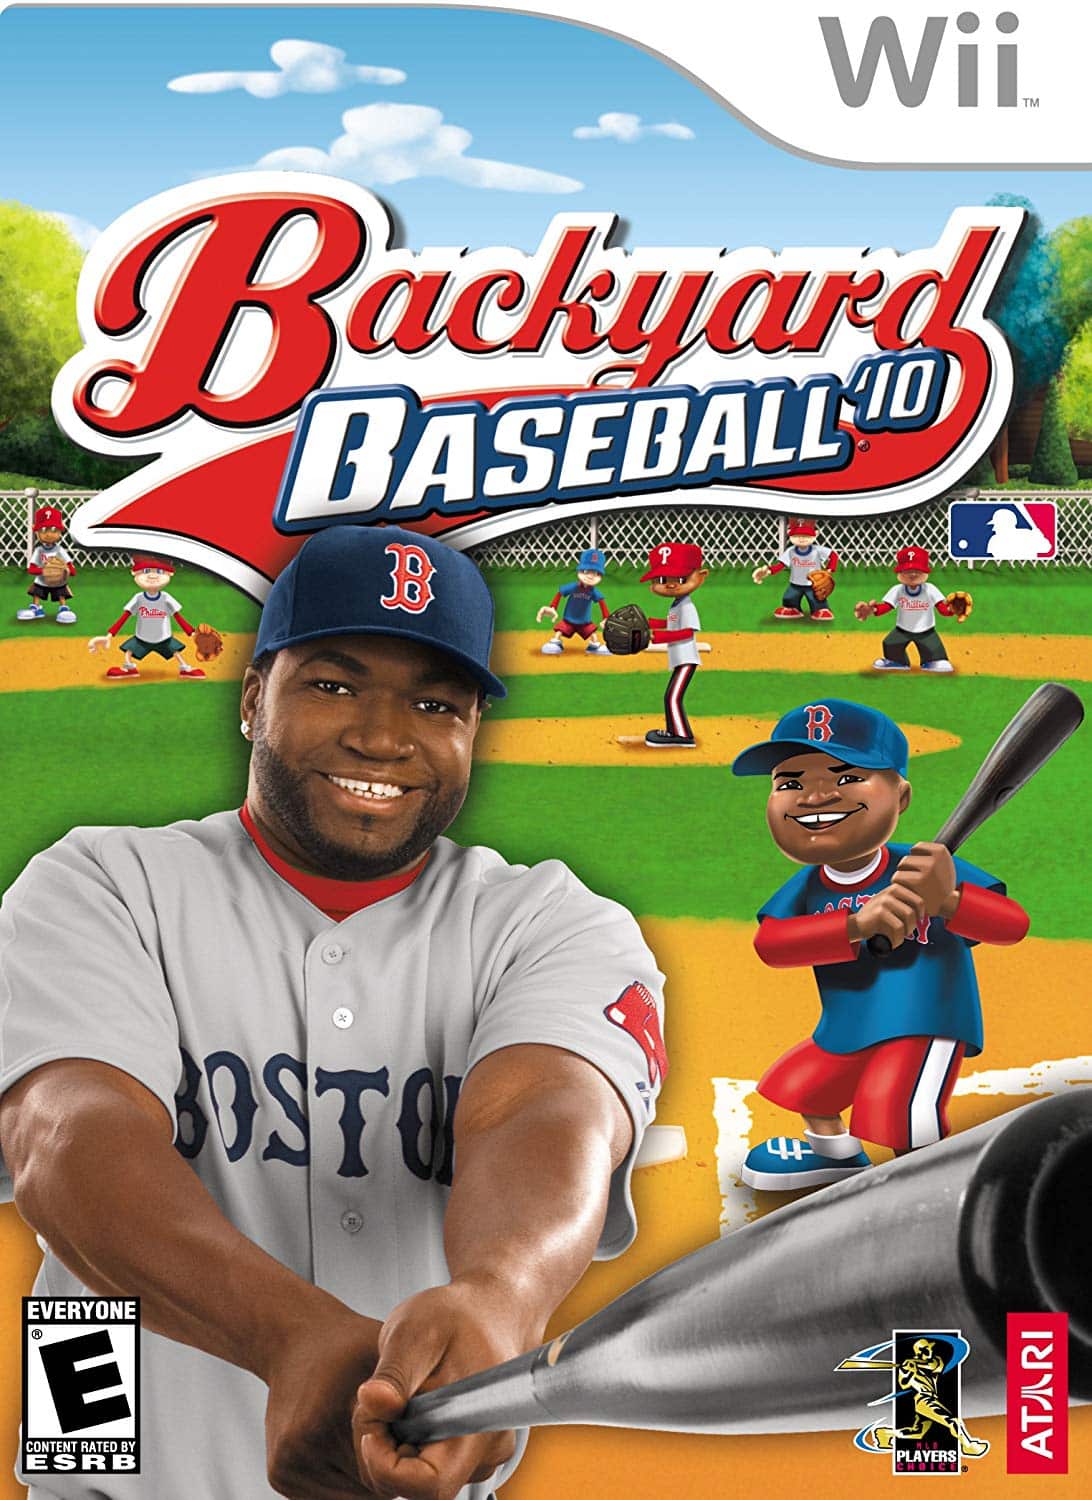 Backyard Baseball ’10 player count stats